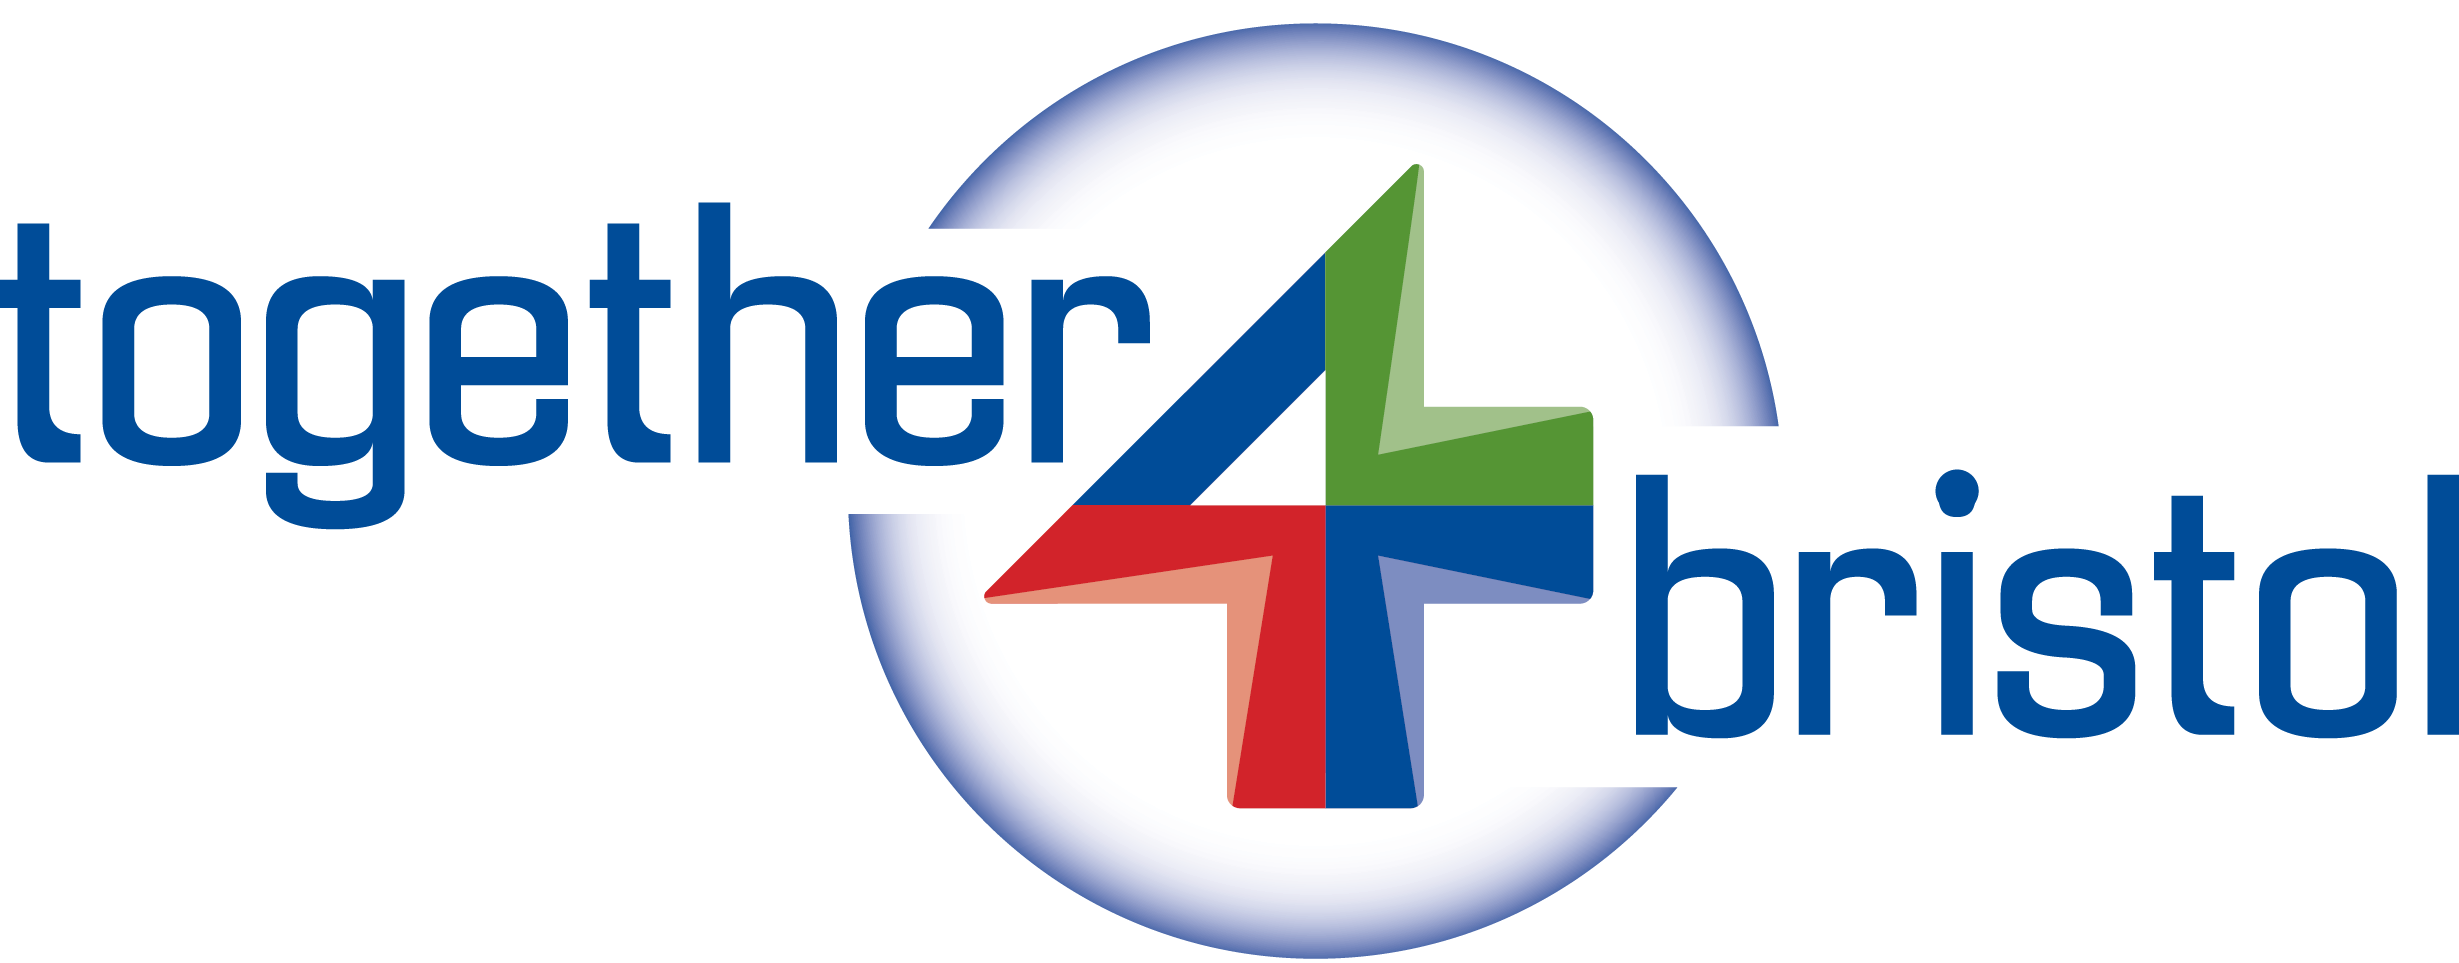 T4B Logo